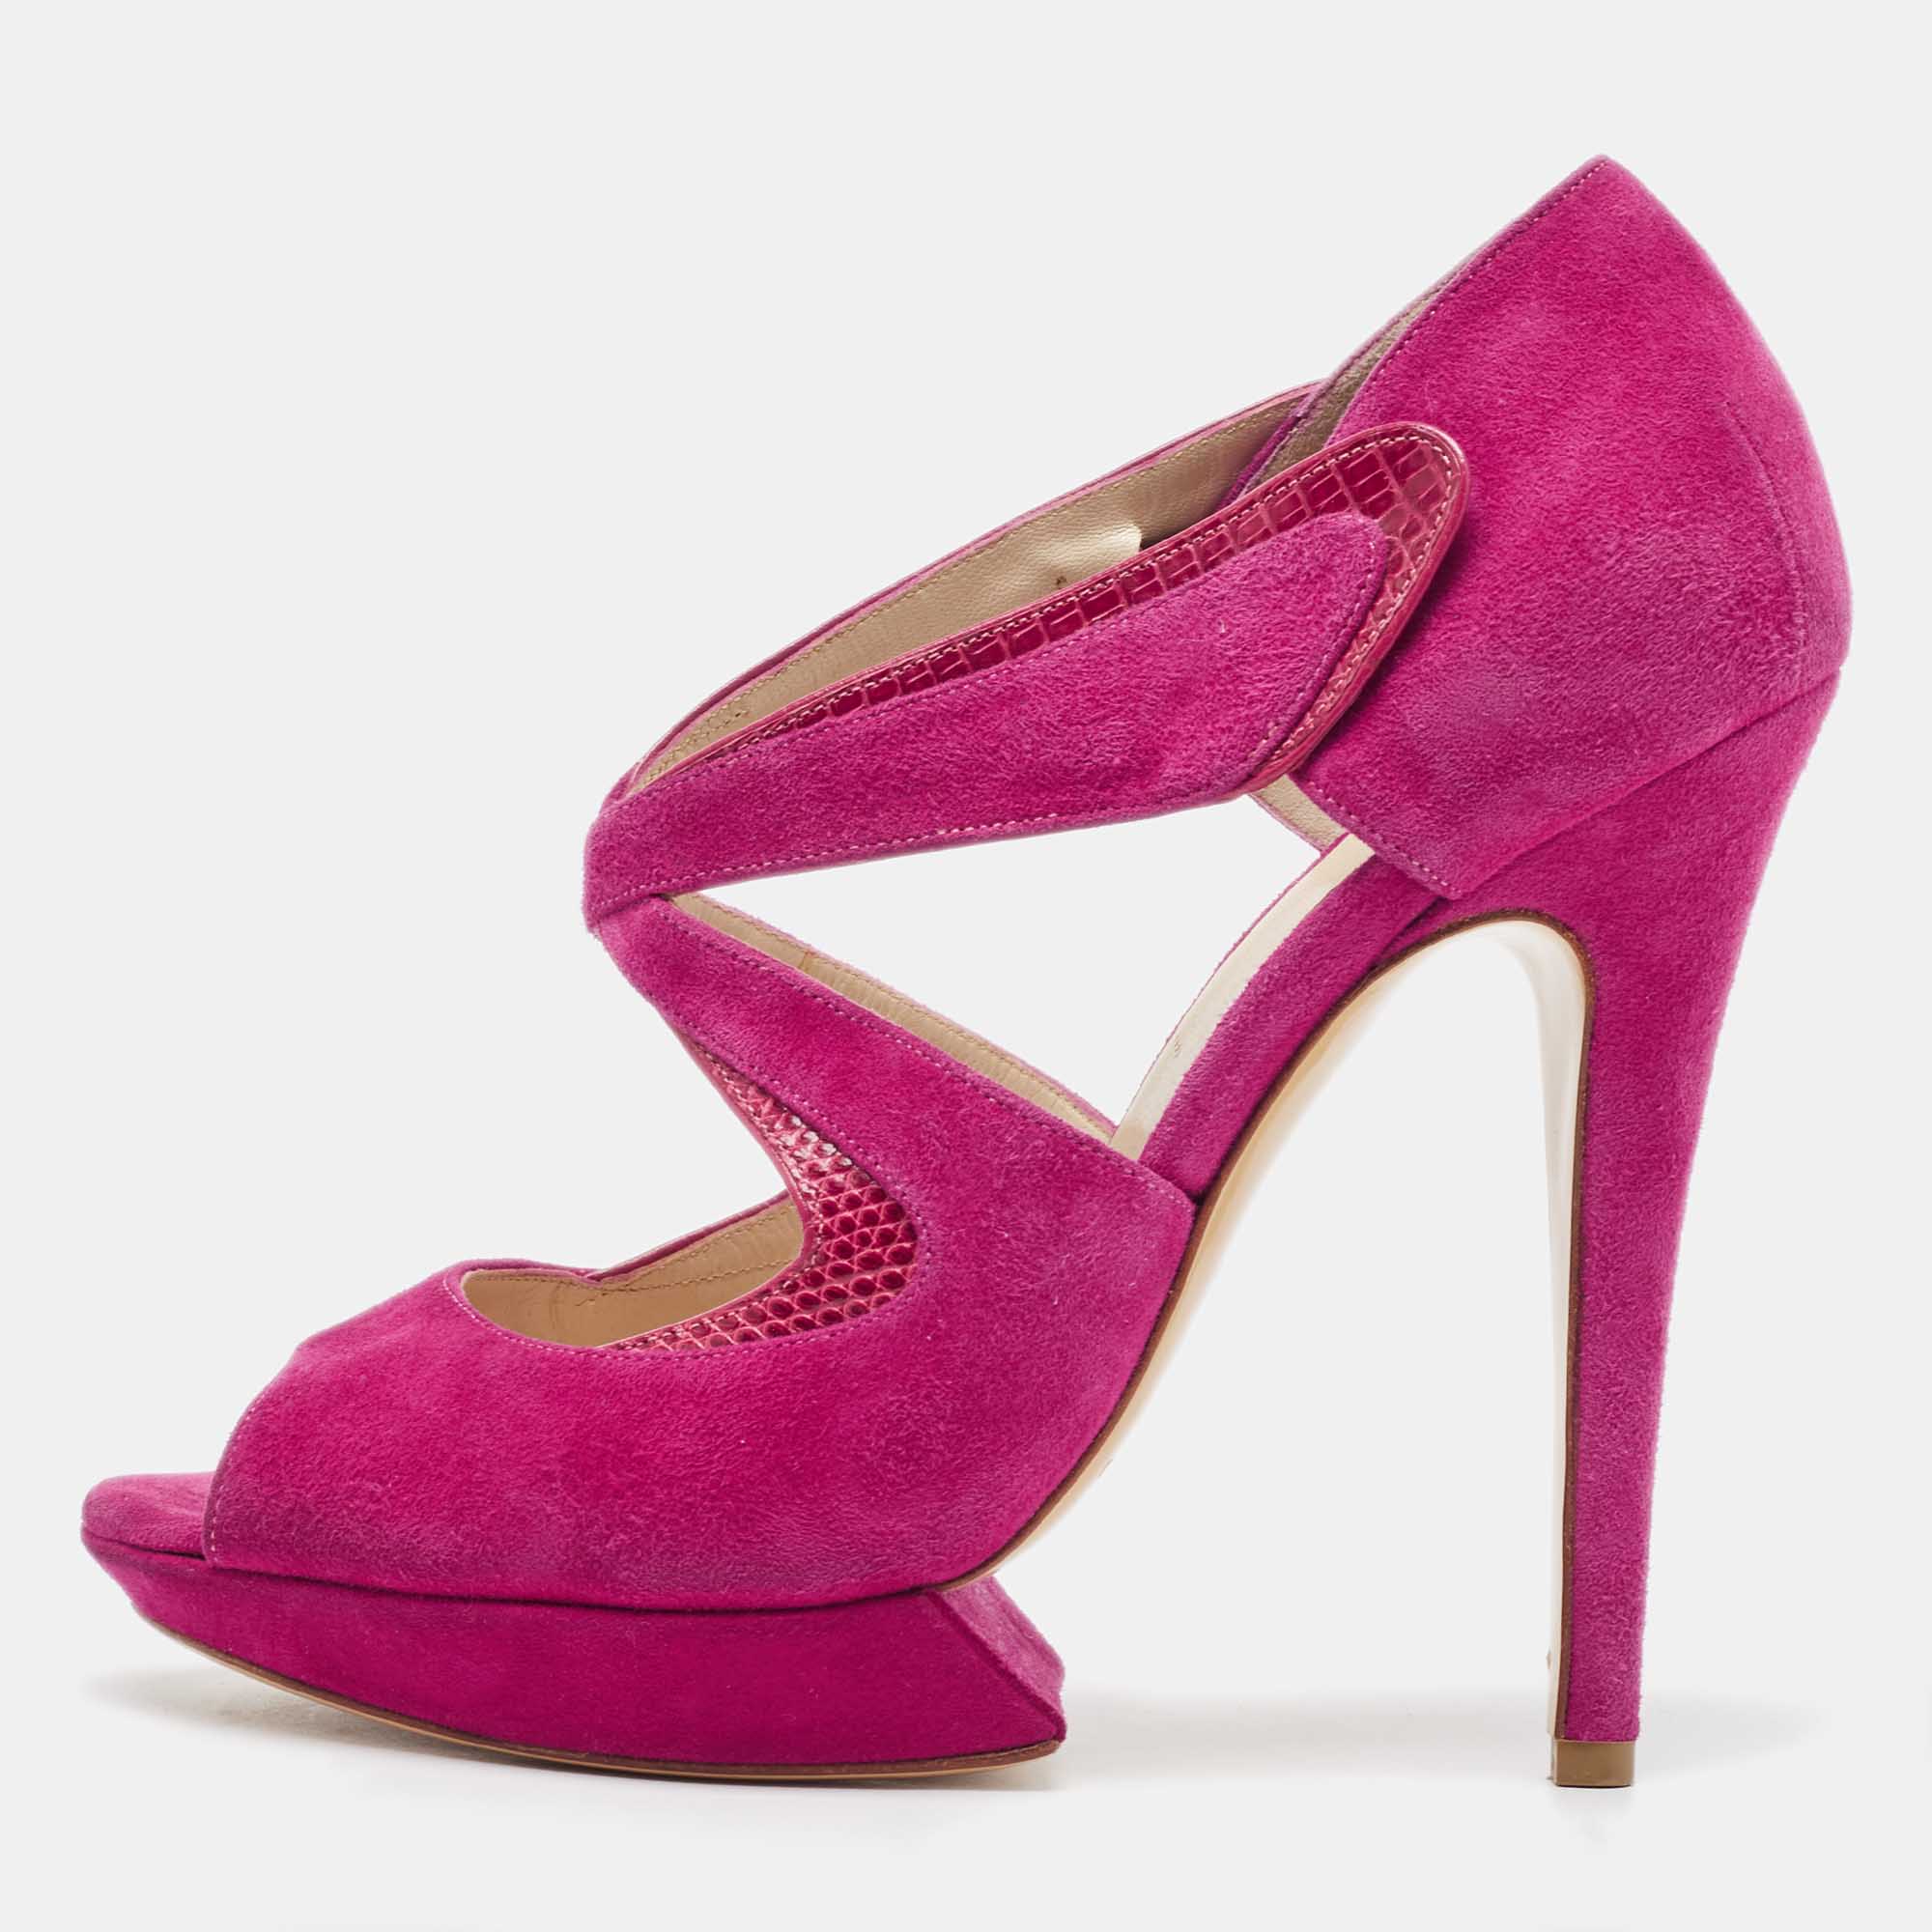 Nicholas kirkwood pink suede and lizard embossed platform sandals size 39